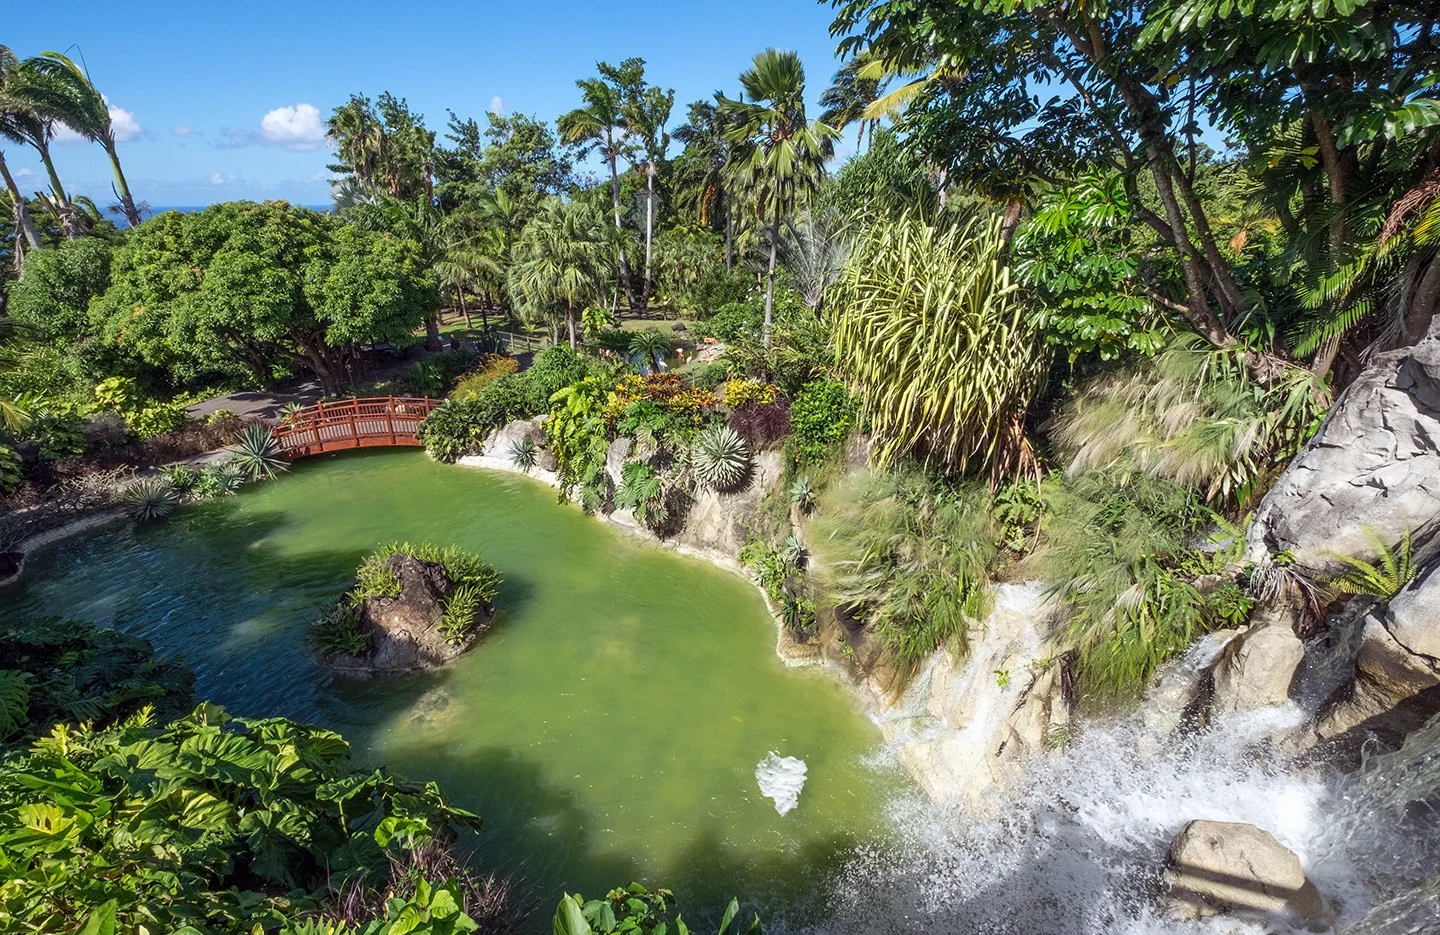 Lake at the Deshaies' Botanic Gardens in Guadeloupe